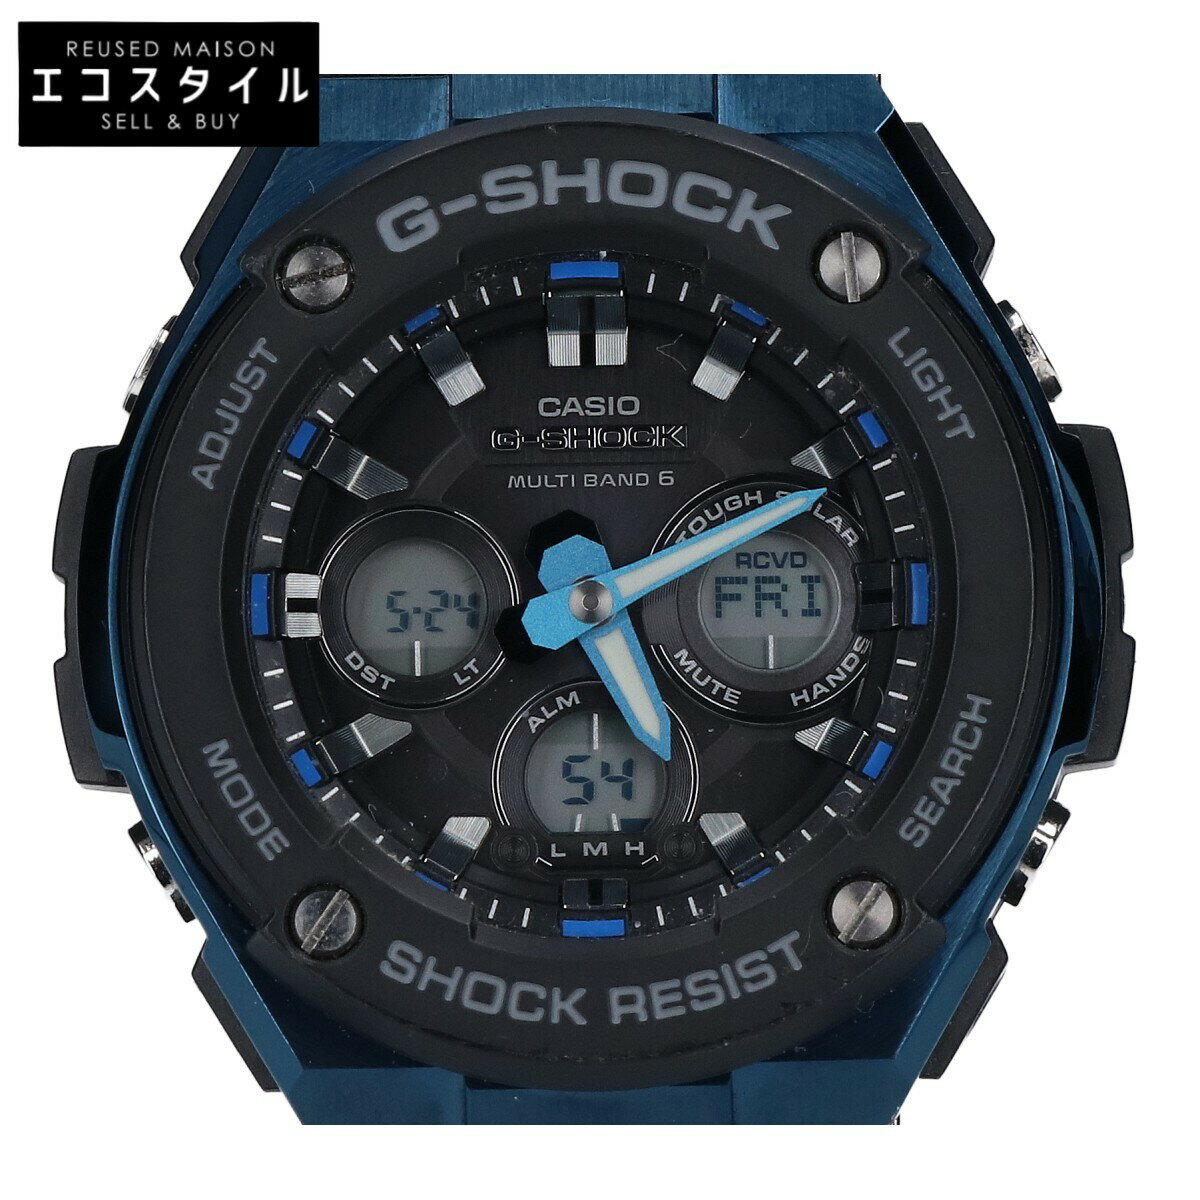 G-SHOCK ジーショック 【美品】GST-W300G-1A2JF G-STEEL Mid Size Series マルチバンド6 タフソーラー電波 腕時計 ブラック メンズ 【中古】